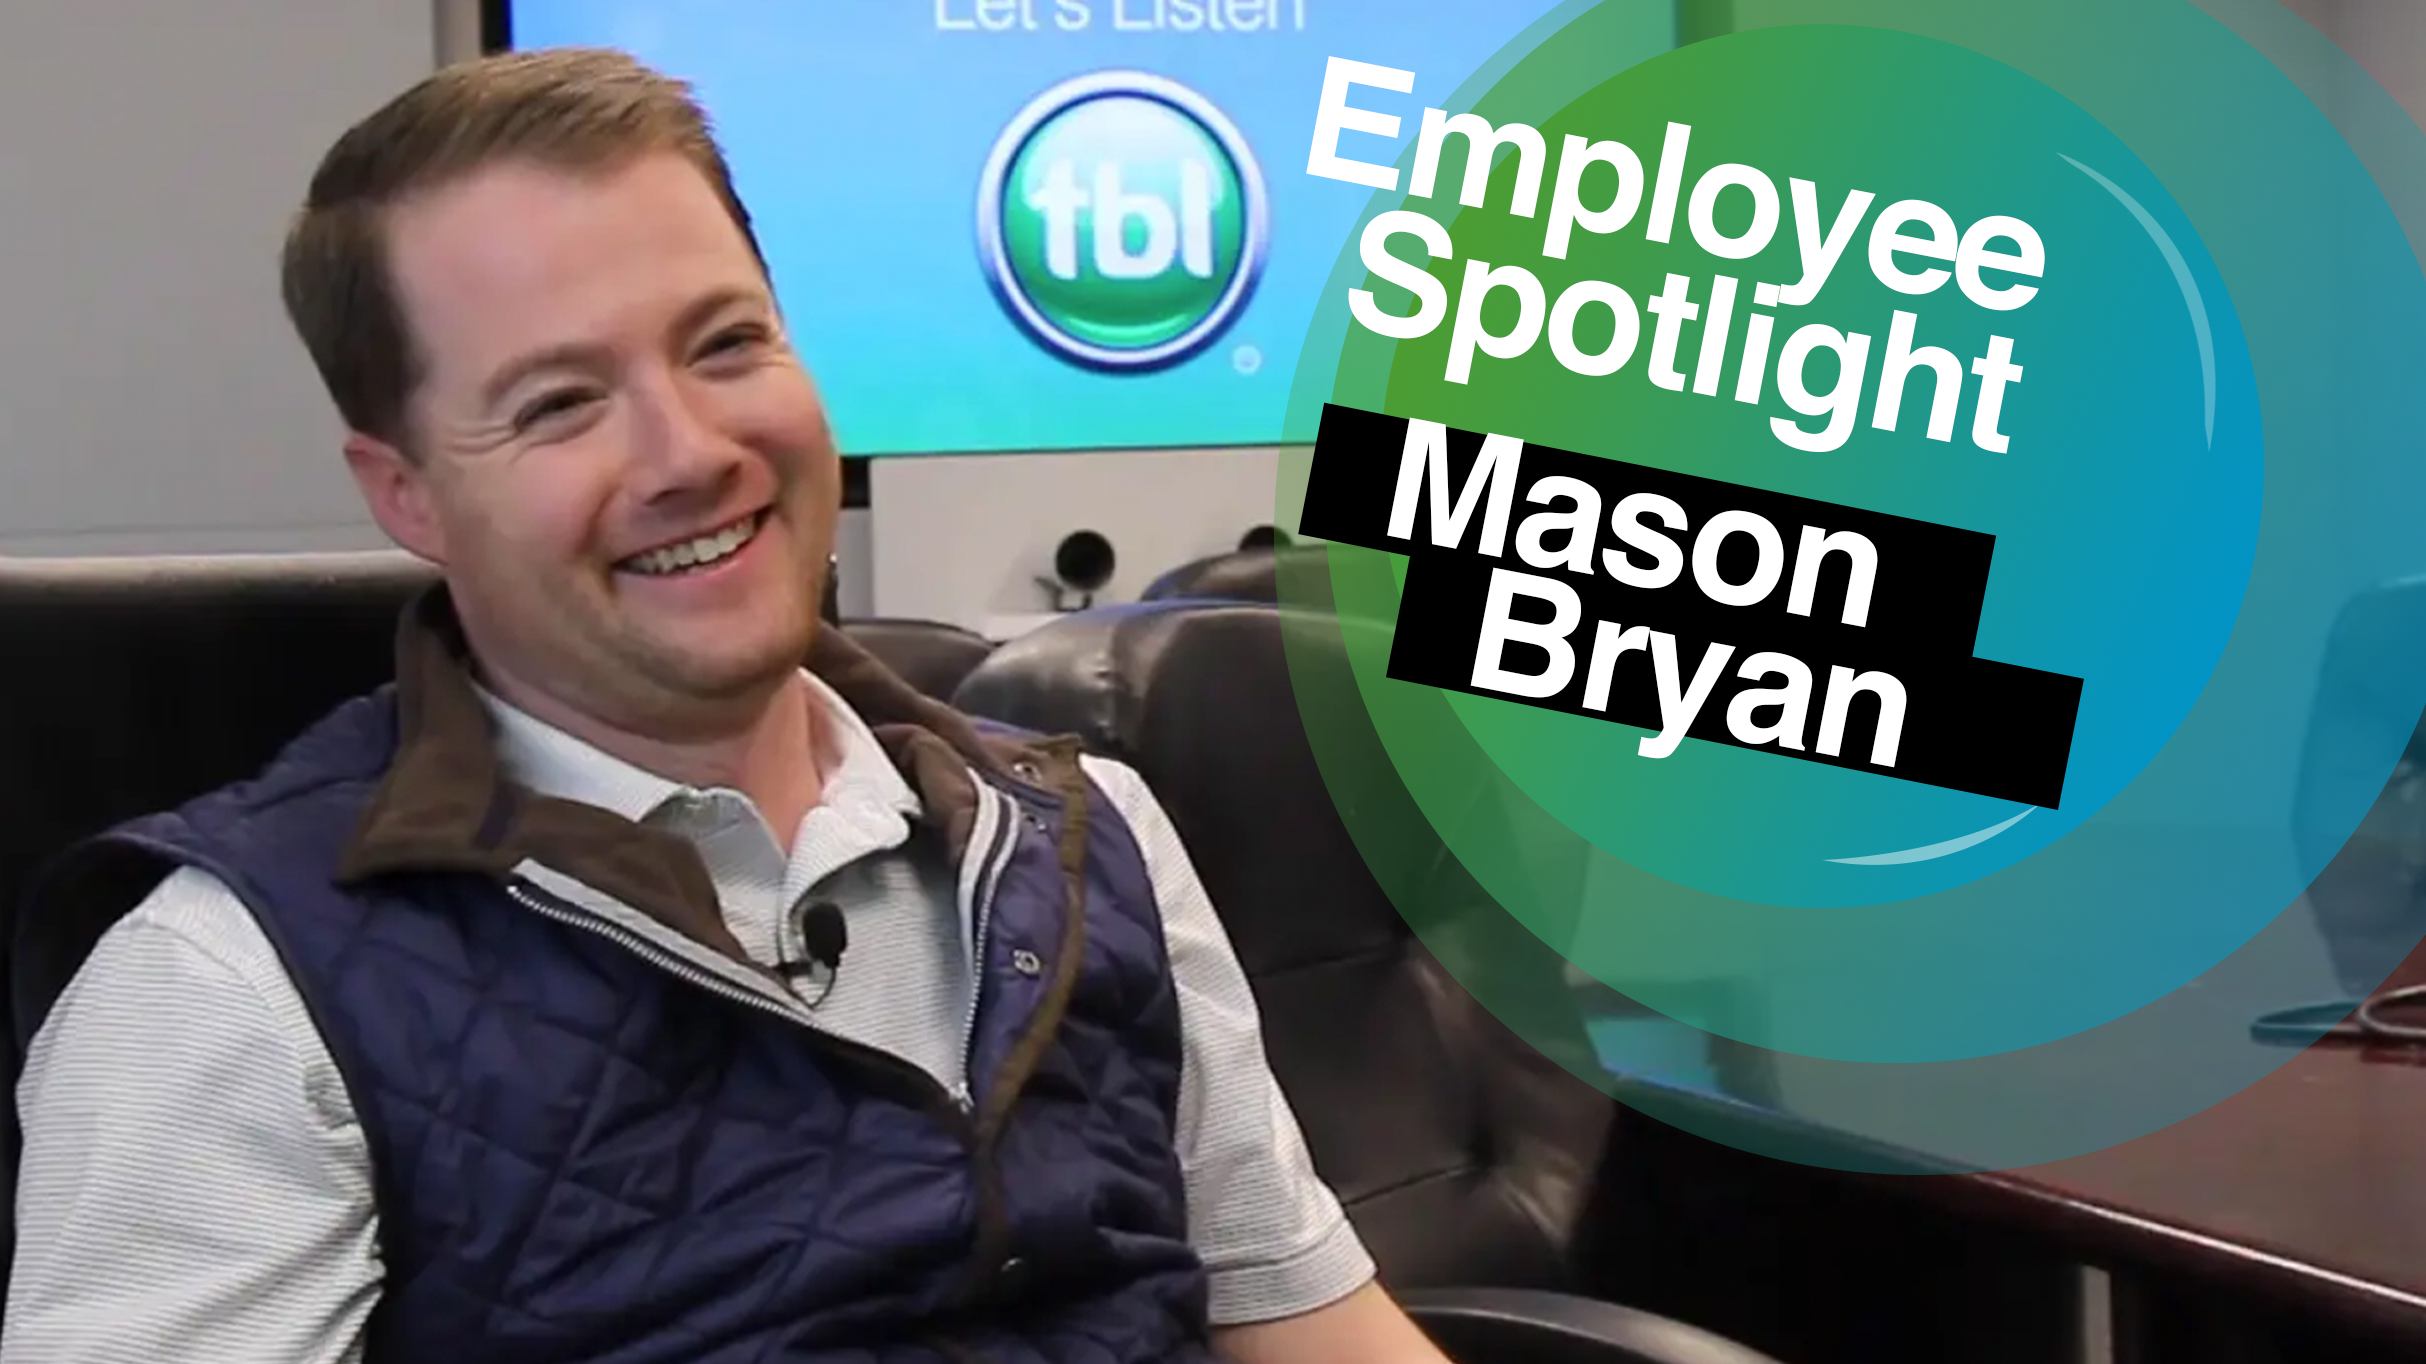 Employee Spotlight: Mason Bryan